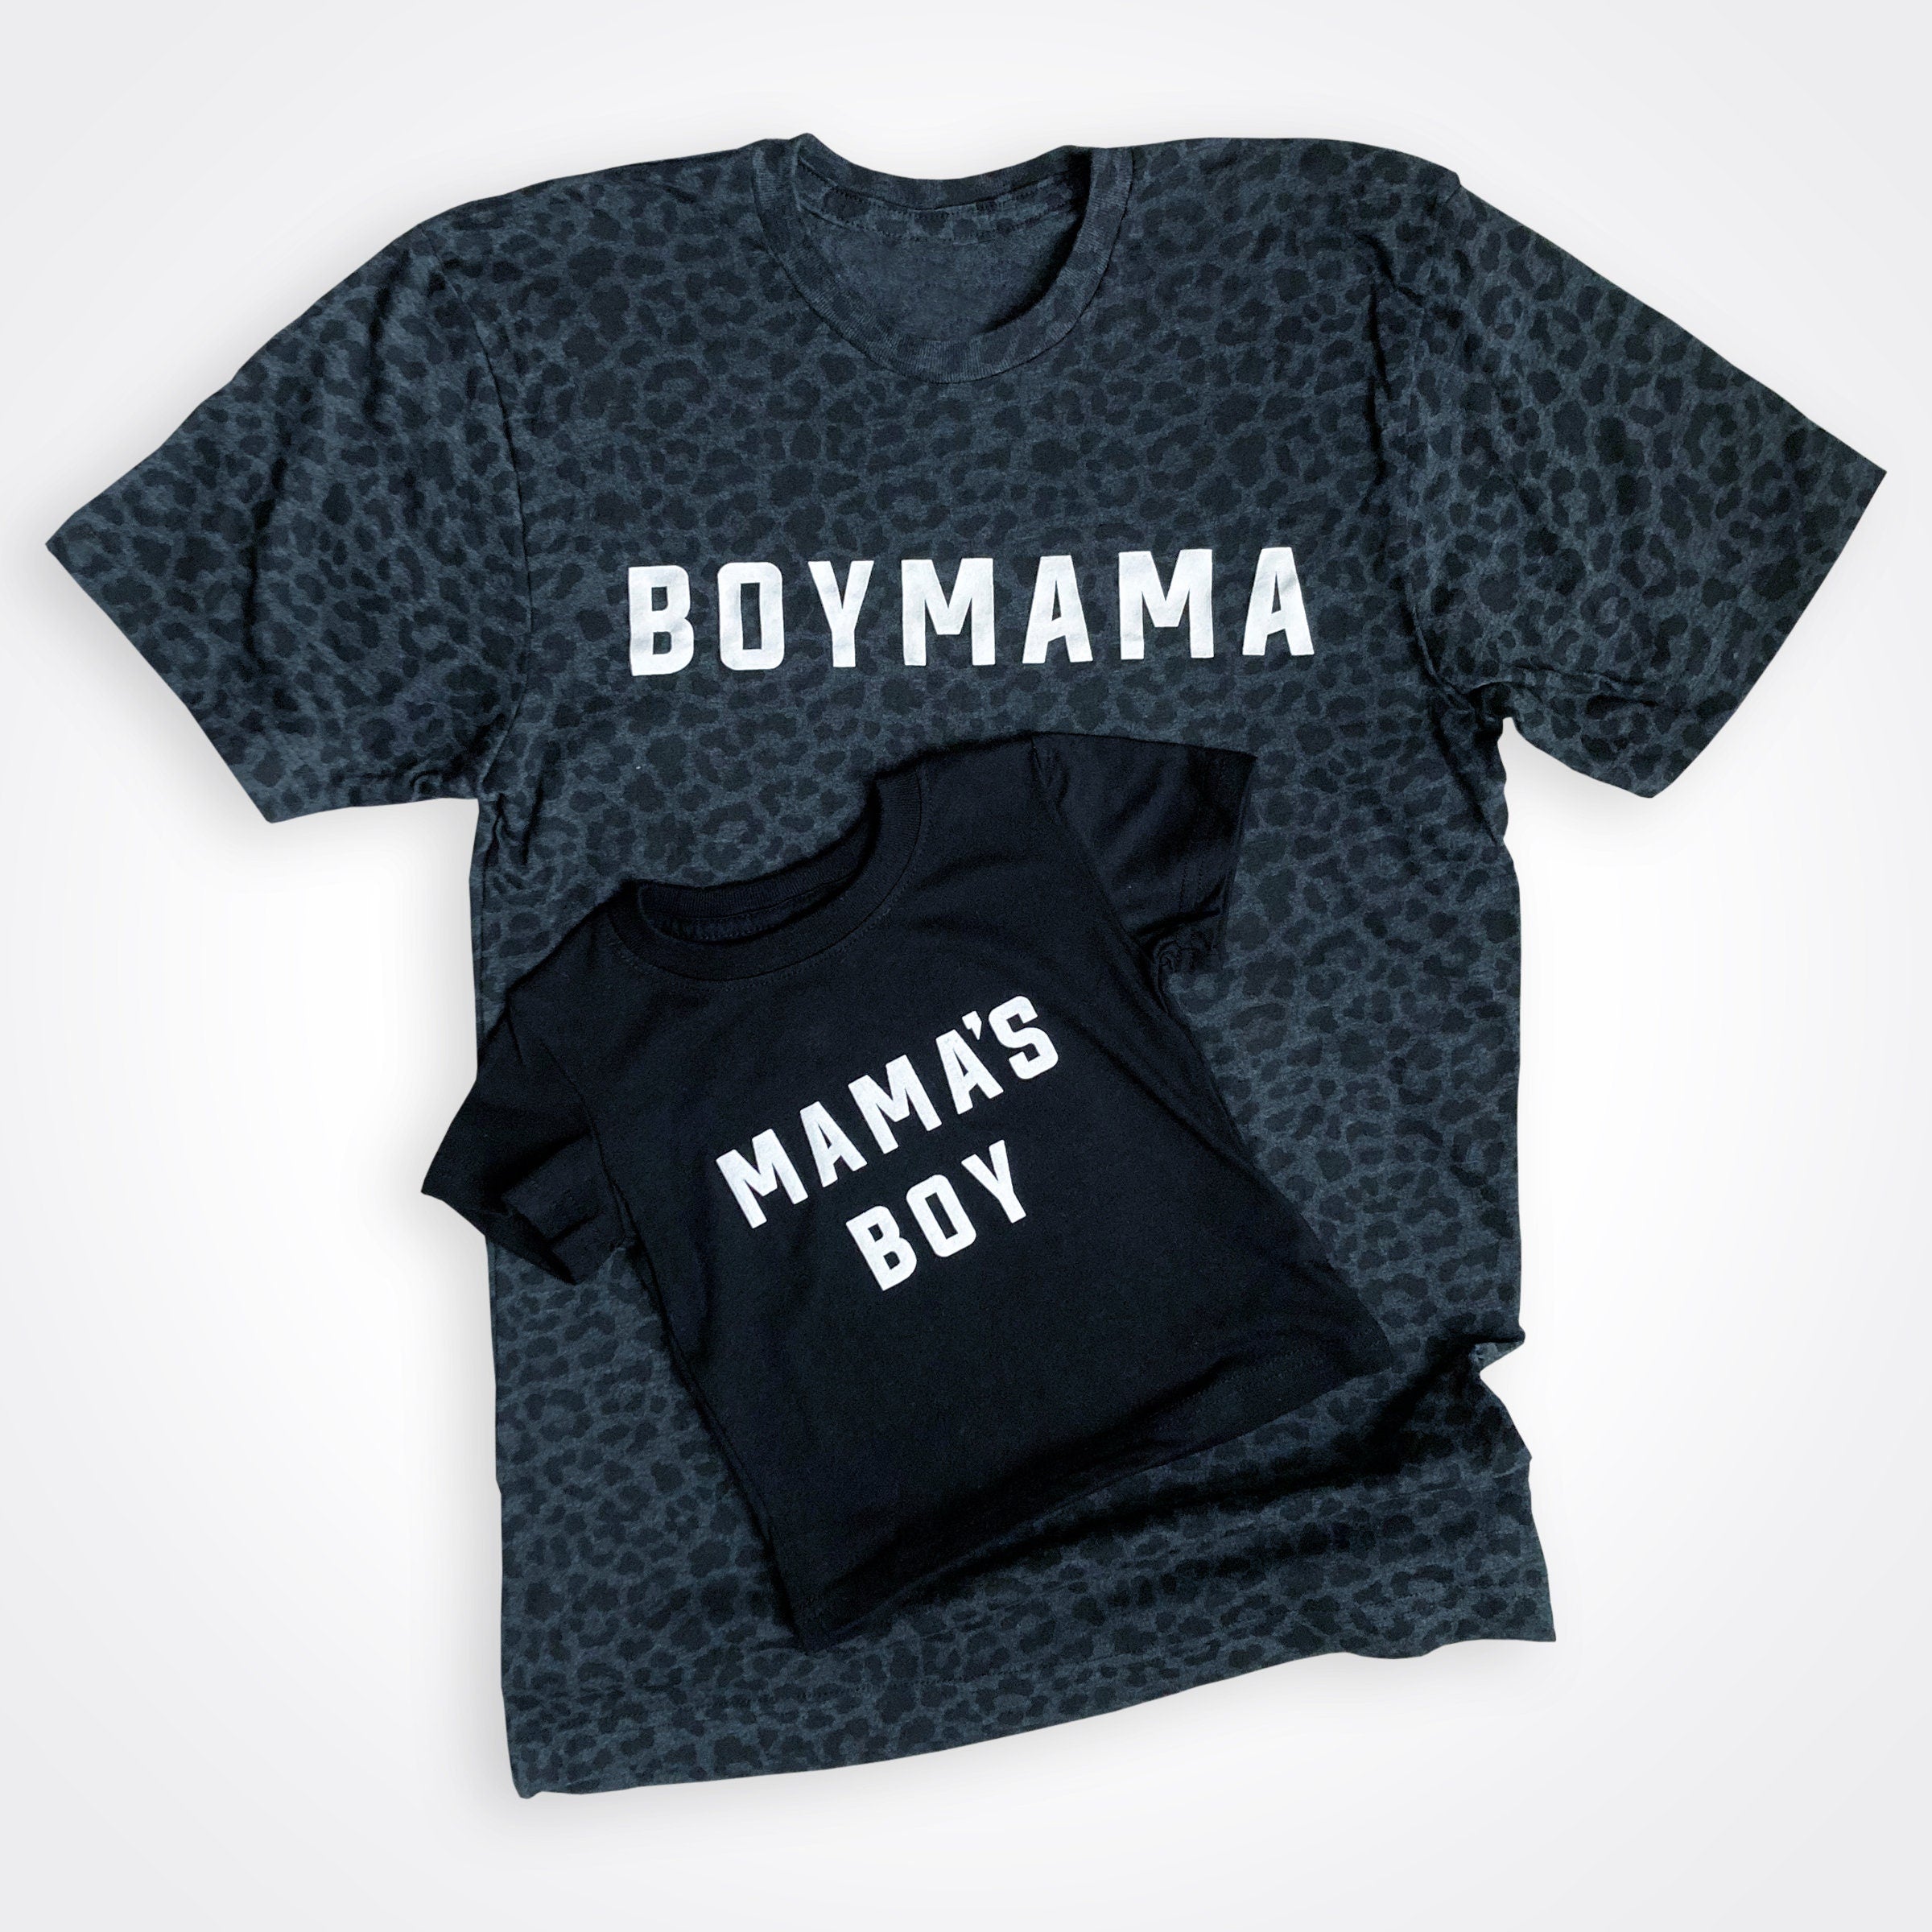 Boy Mama Leopard Print Shirt